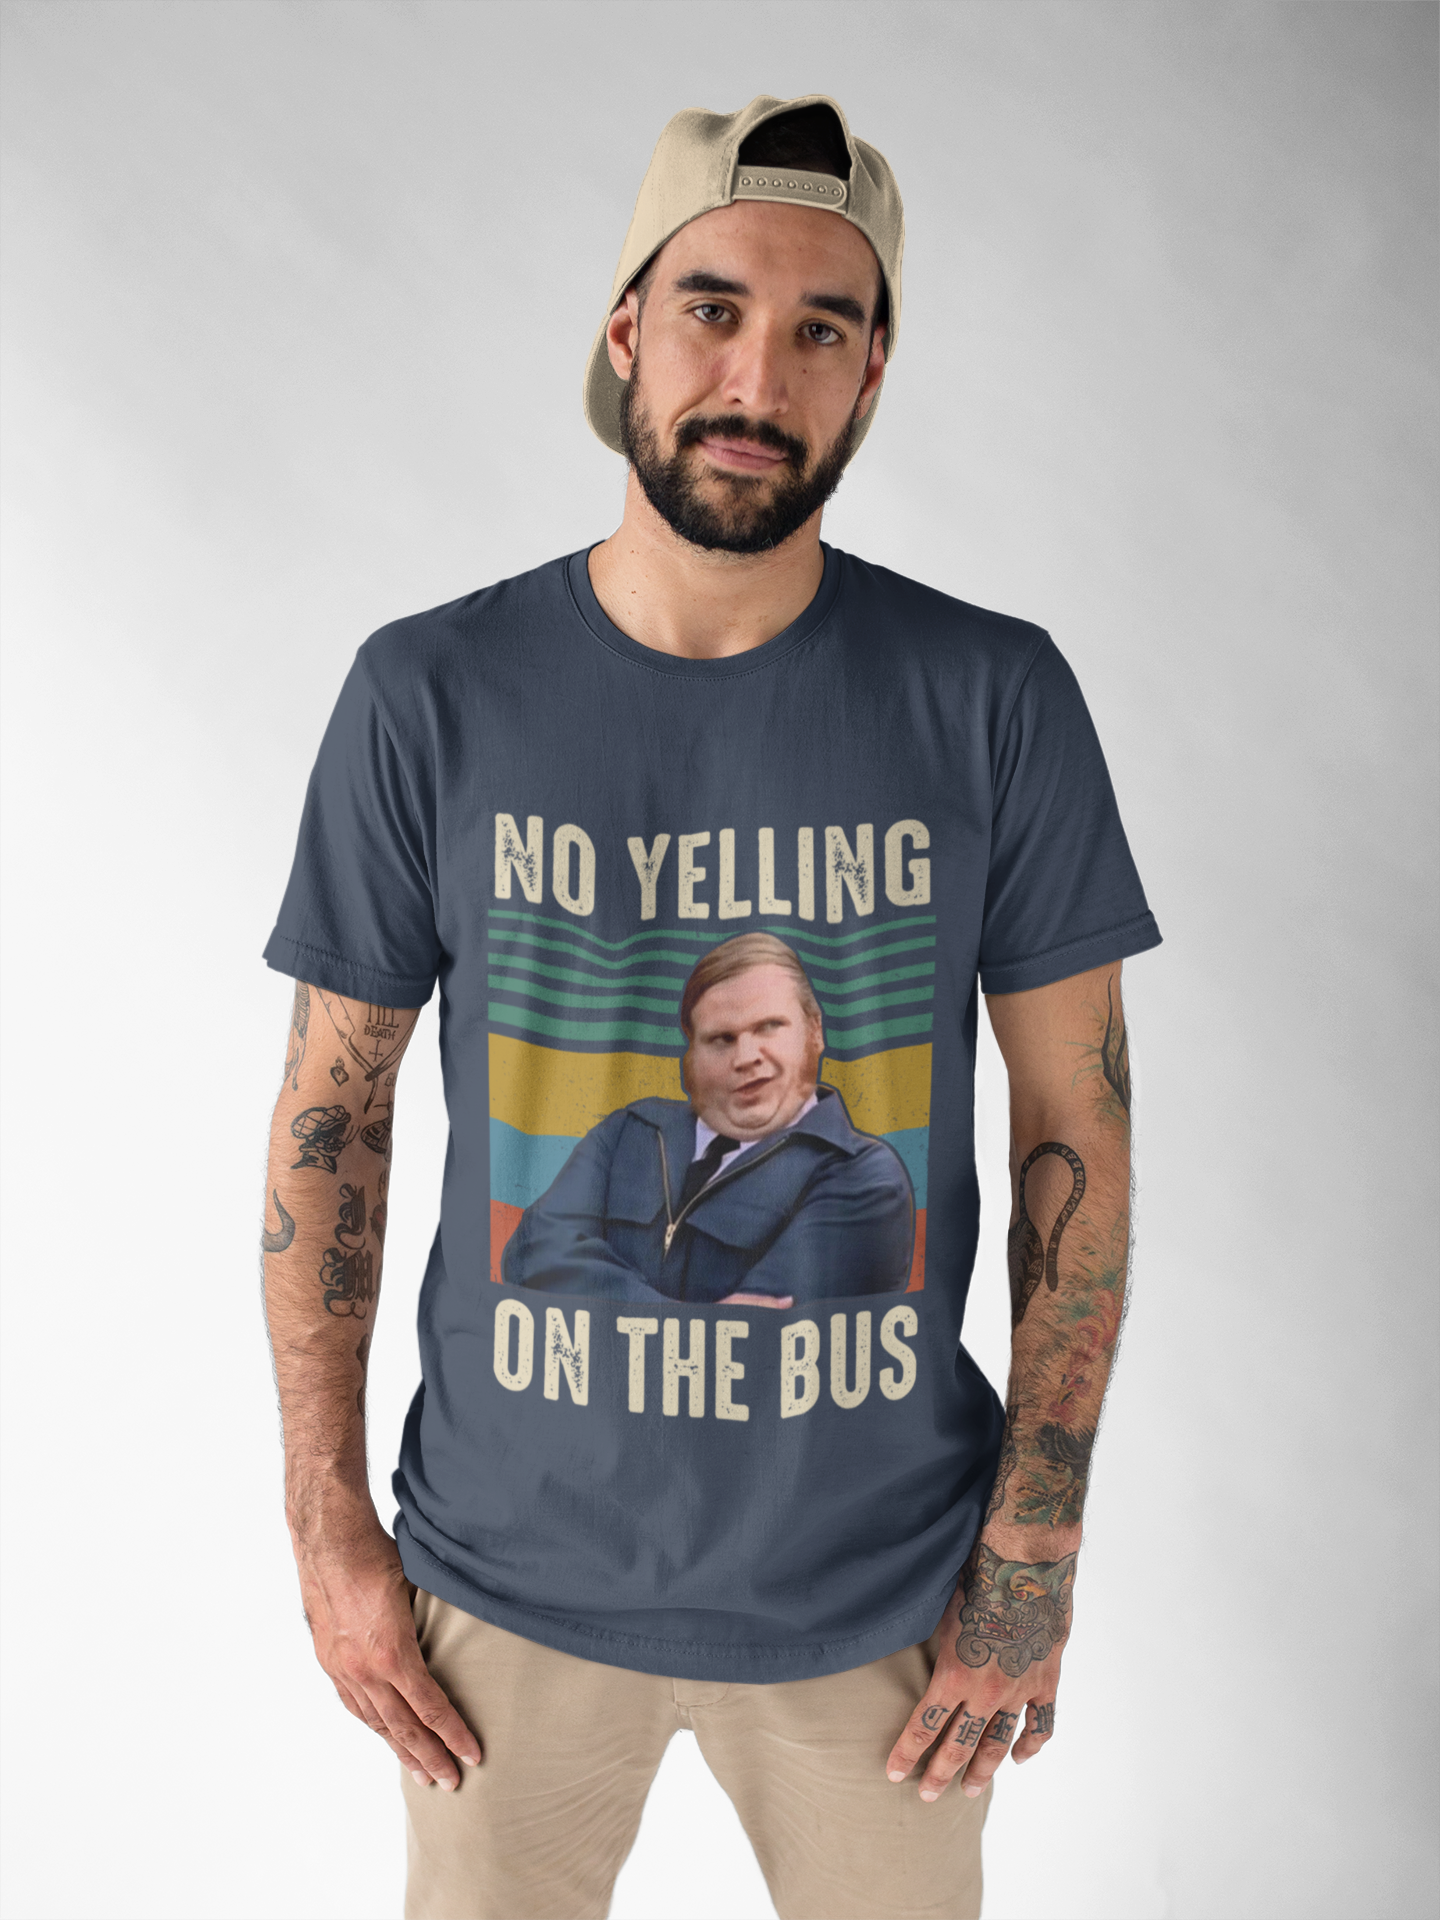 Billy Madison Comedy Film T Shirt, Bus Driver Tshirt, No Yelling On The Bus T Shirt